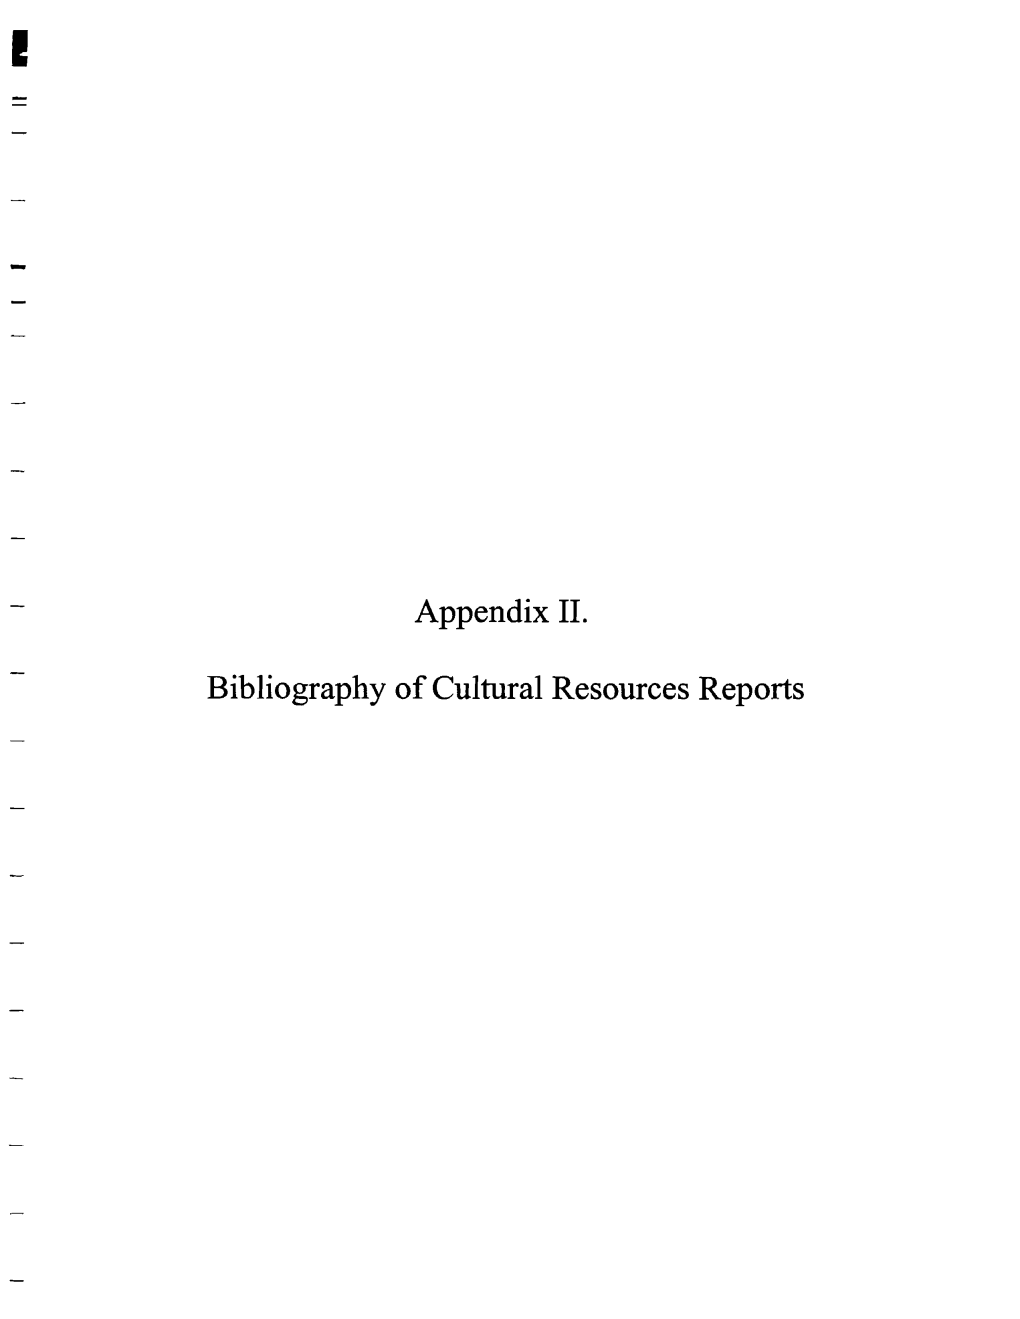 Appendix II. Bibliography of Cultural Resources Reports